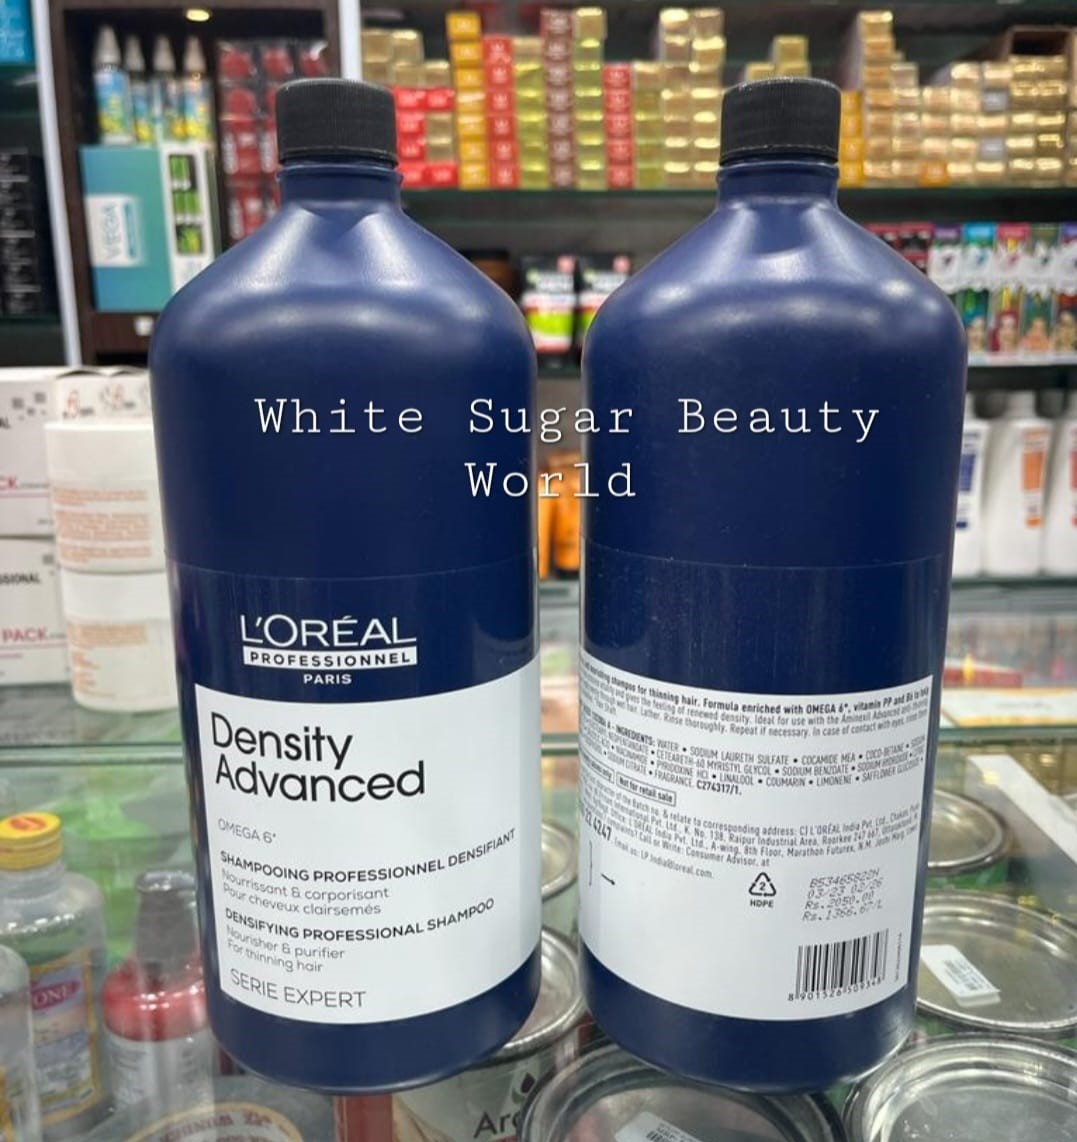 loreal density advanced 1500ml szampon